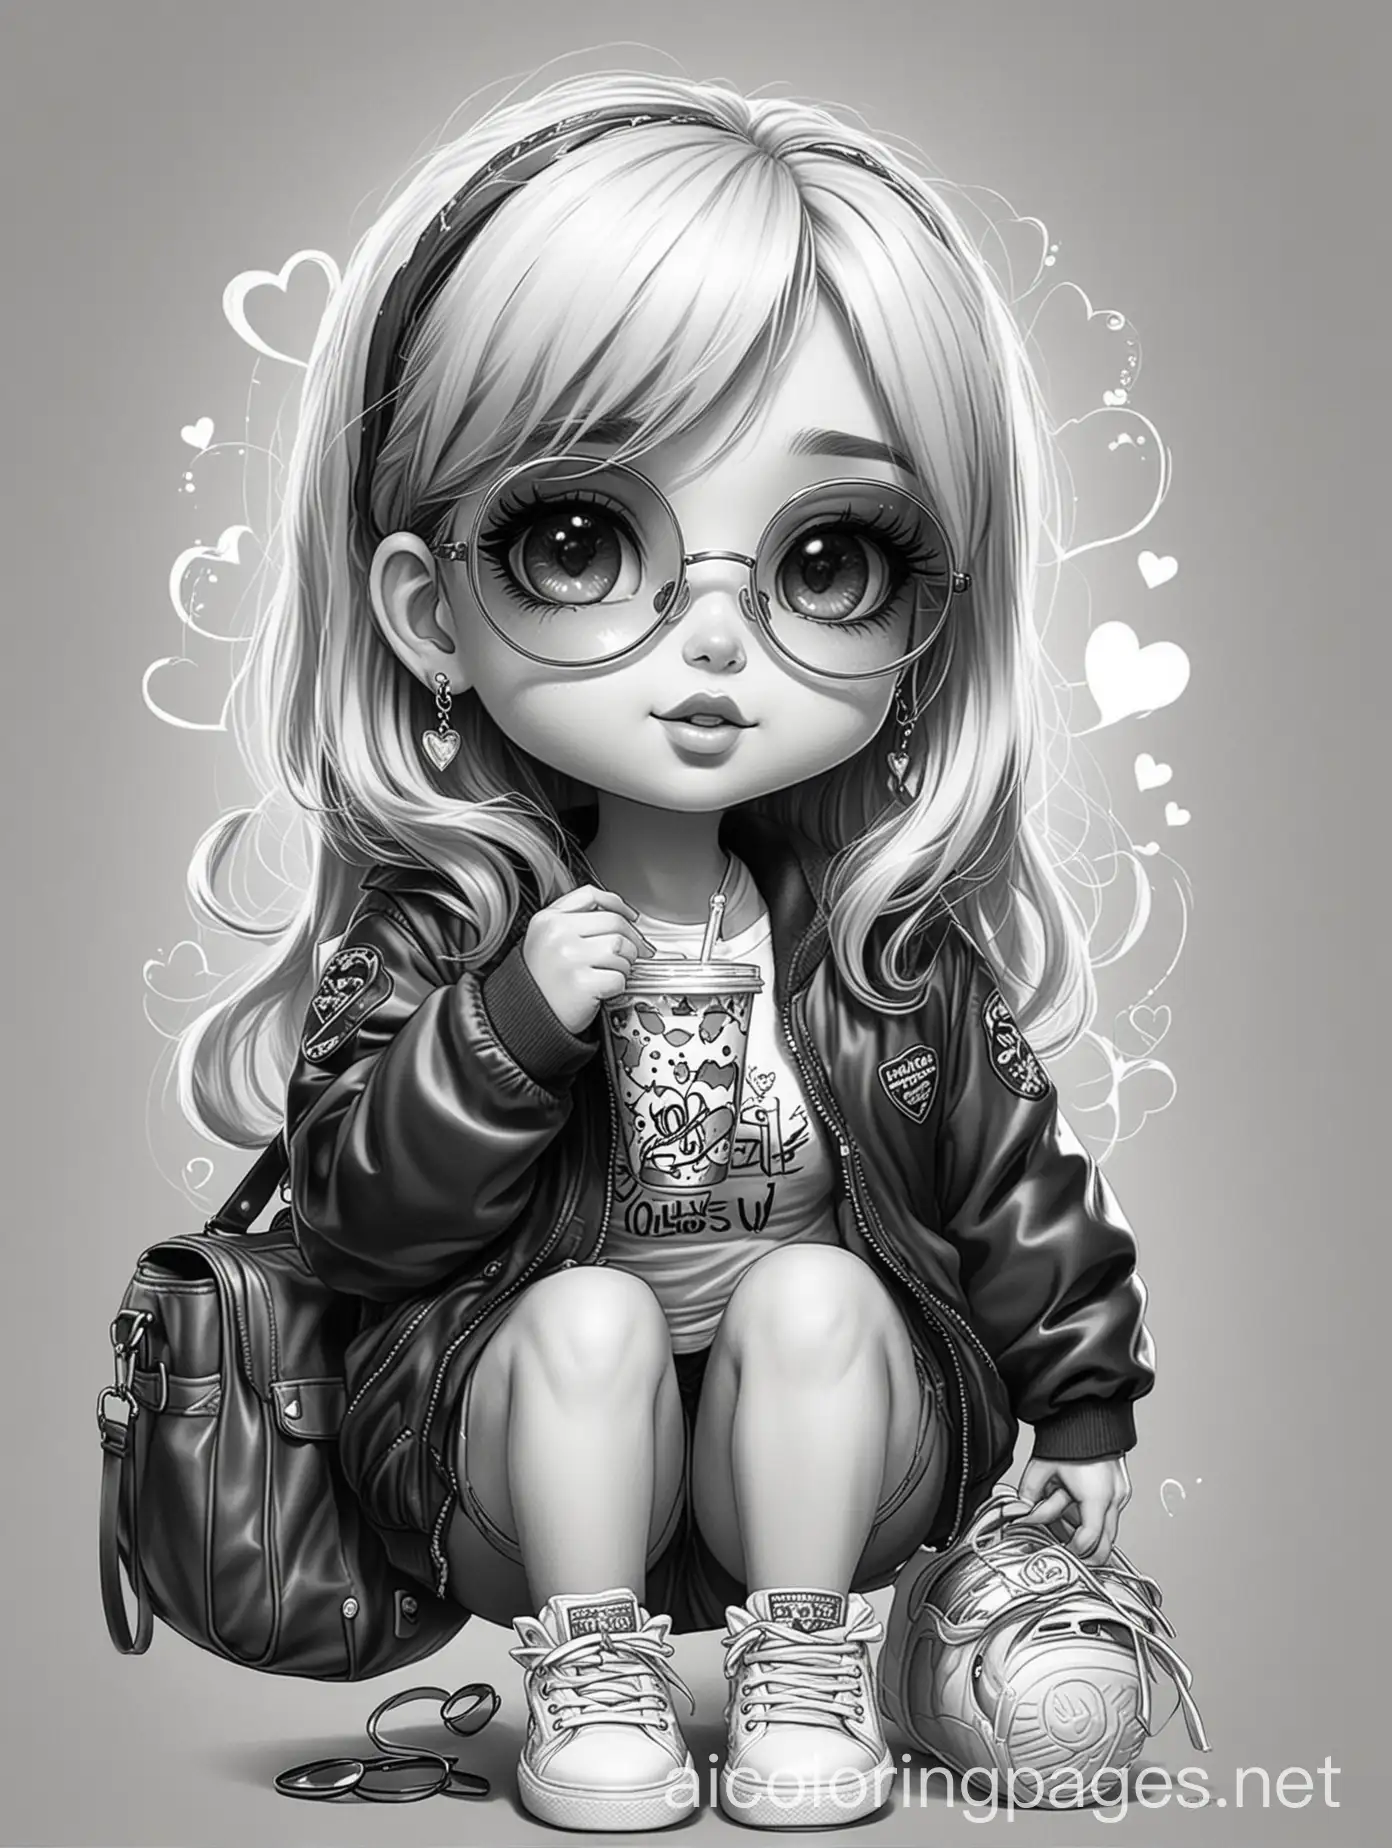 Chibi-Woman-with-Heartshaped-Sunglasses-Holding-Bubble-Tea